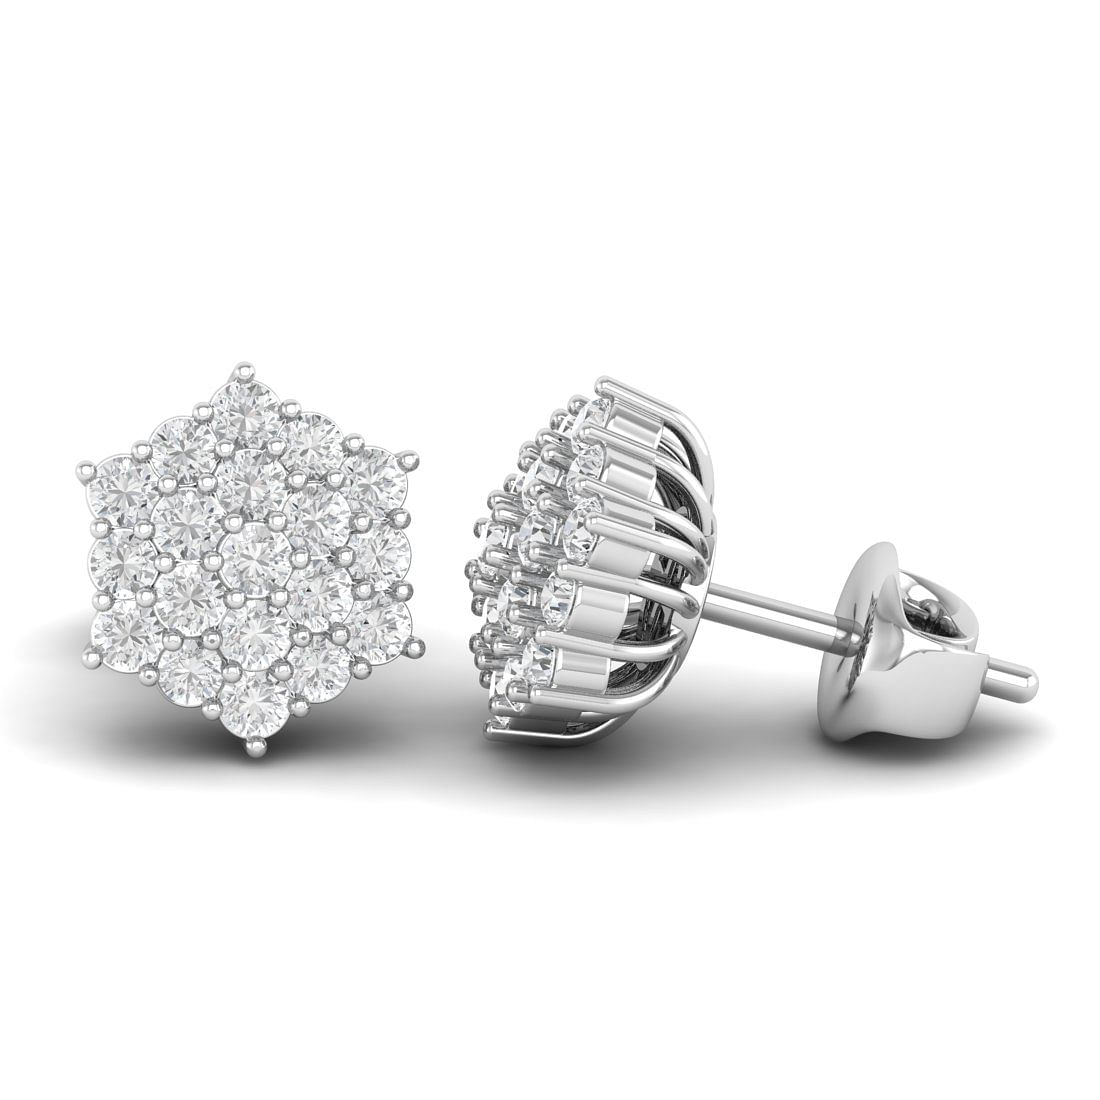 14k White Gold Galaxy Diamond Earrings For Her